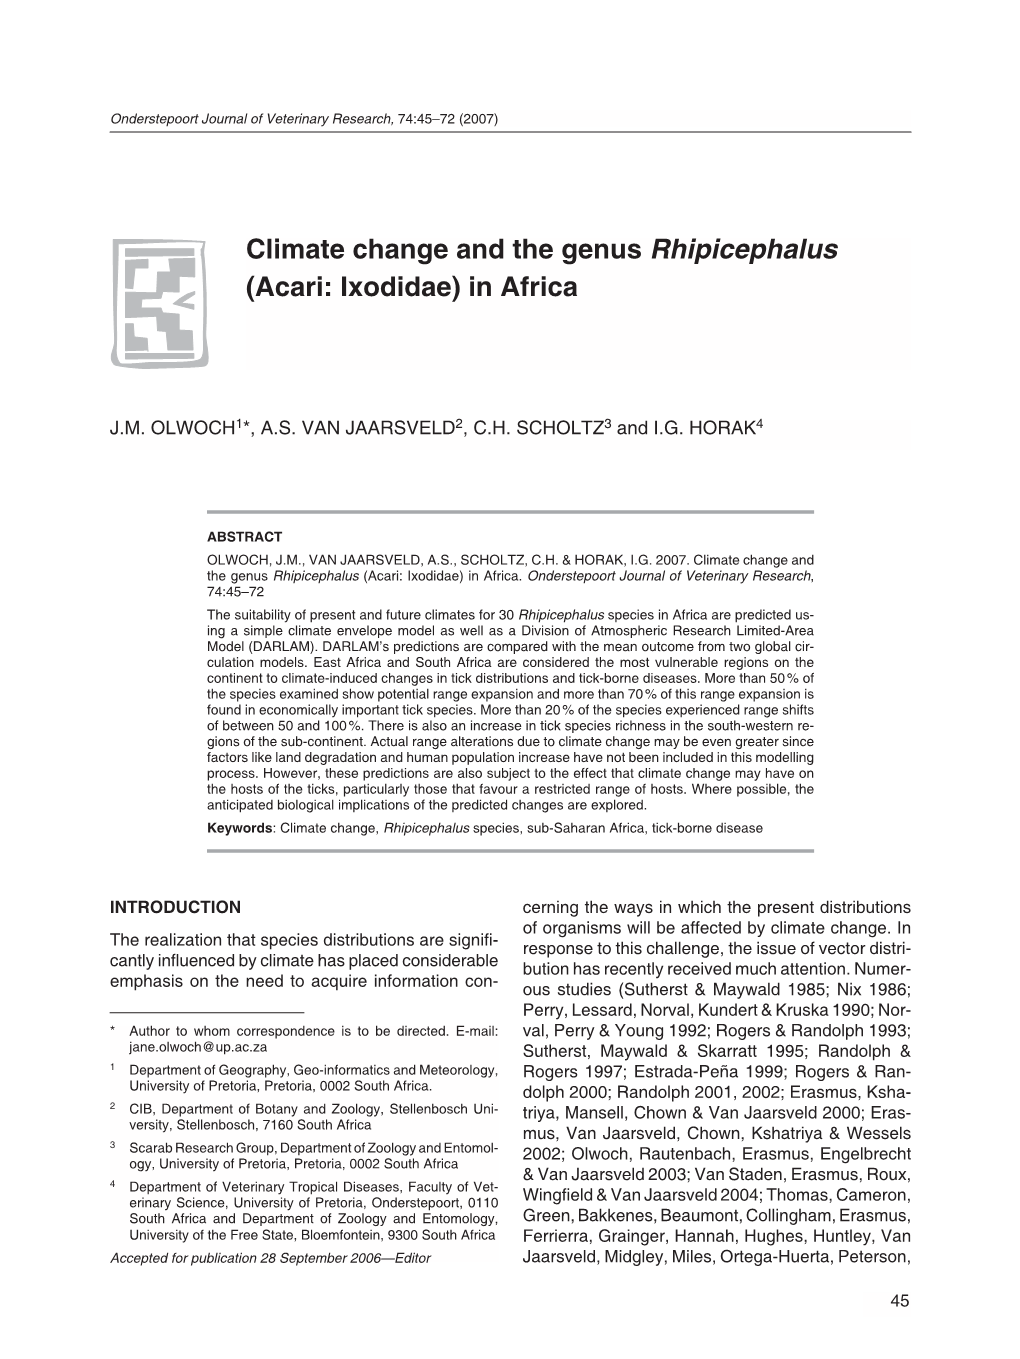 Climate Change and the Genus Rhipicephalus (Acari: Ixodidae) in Africa